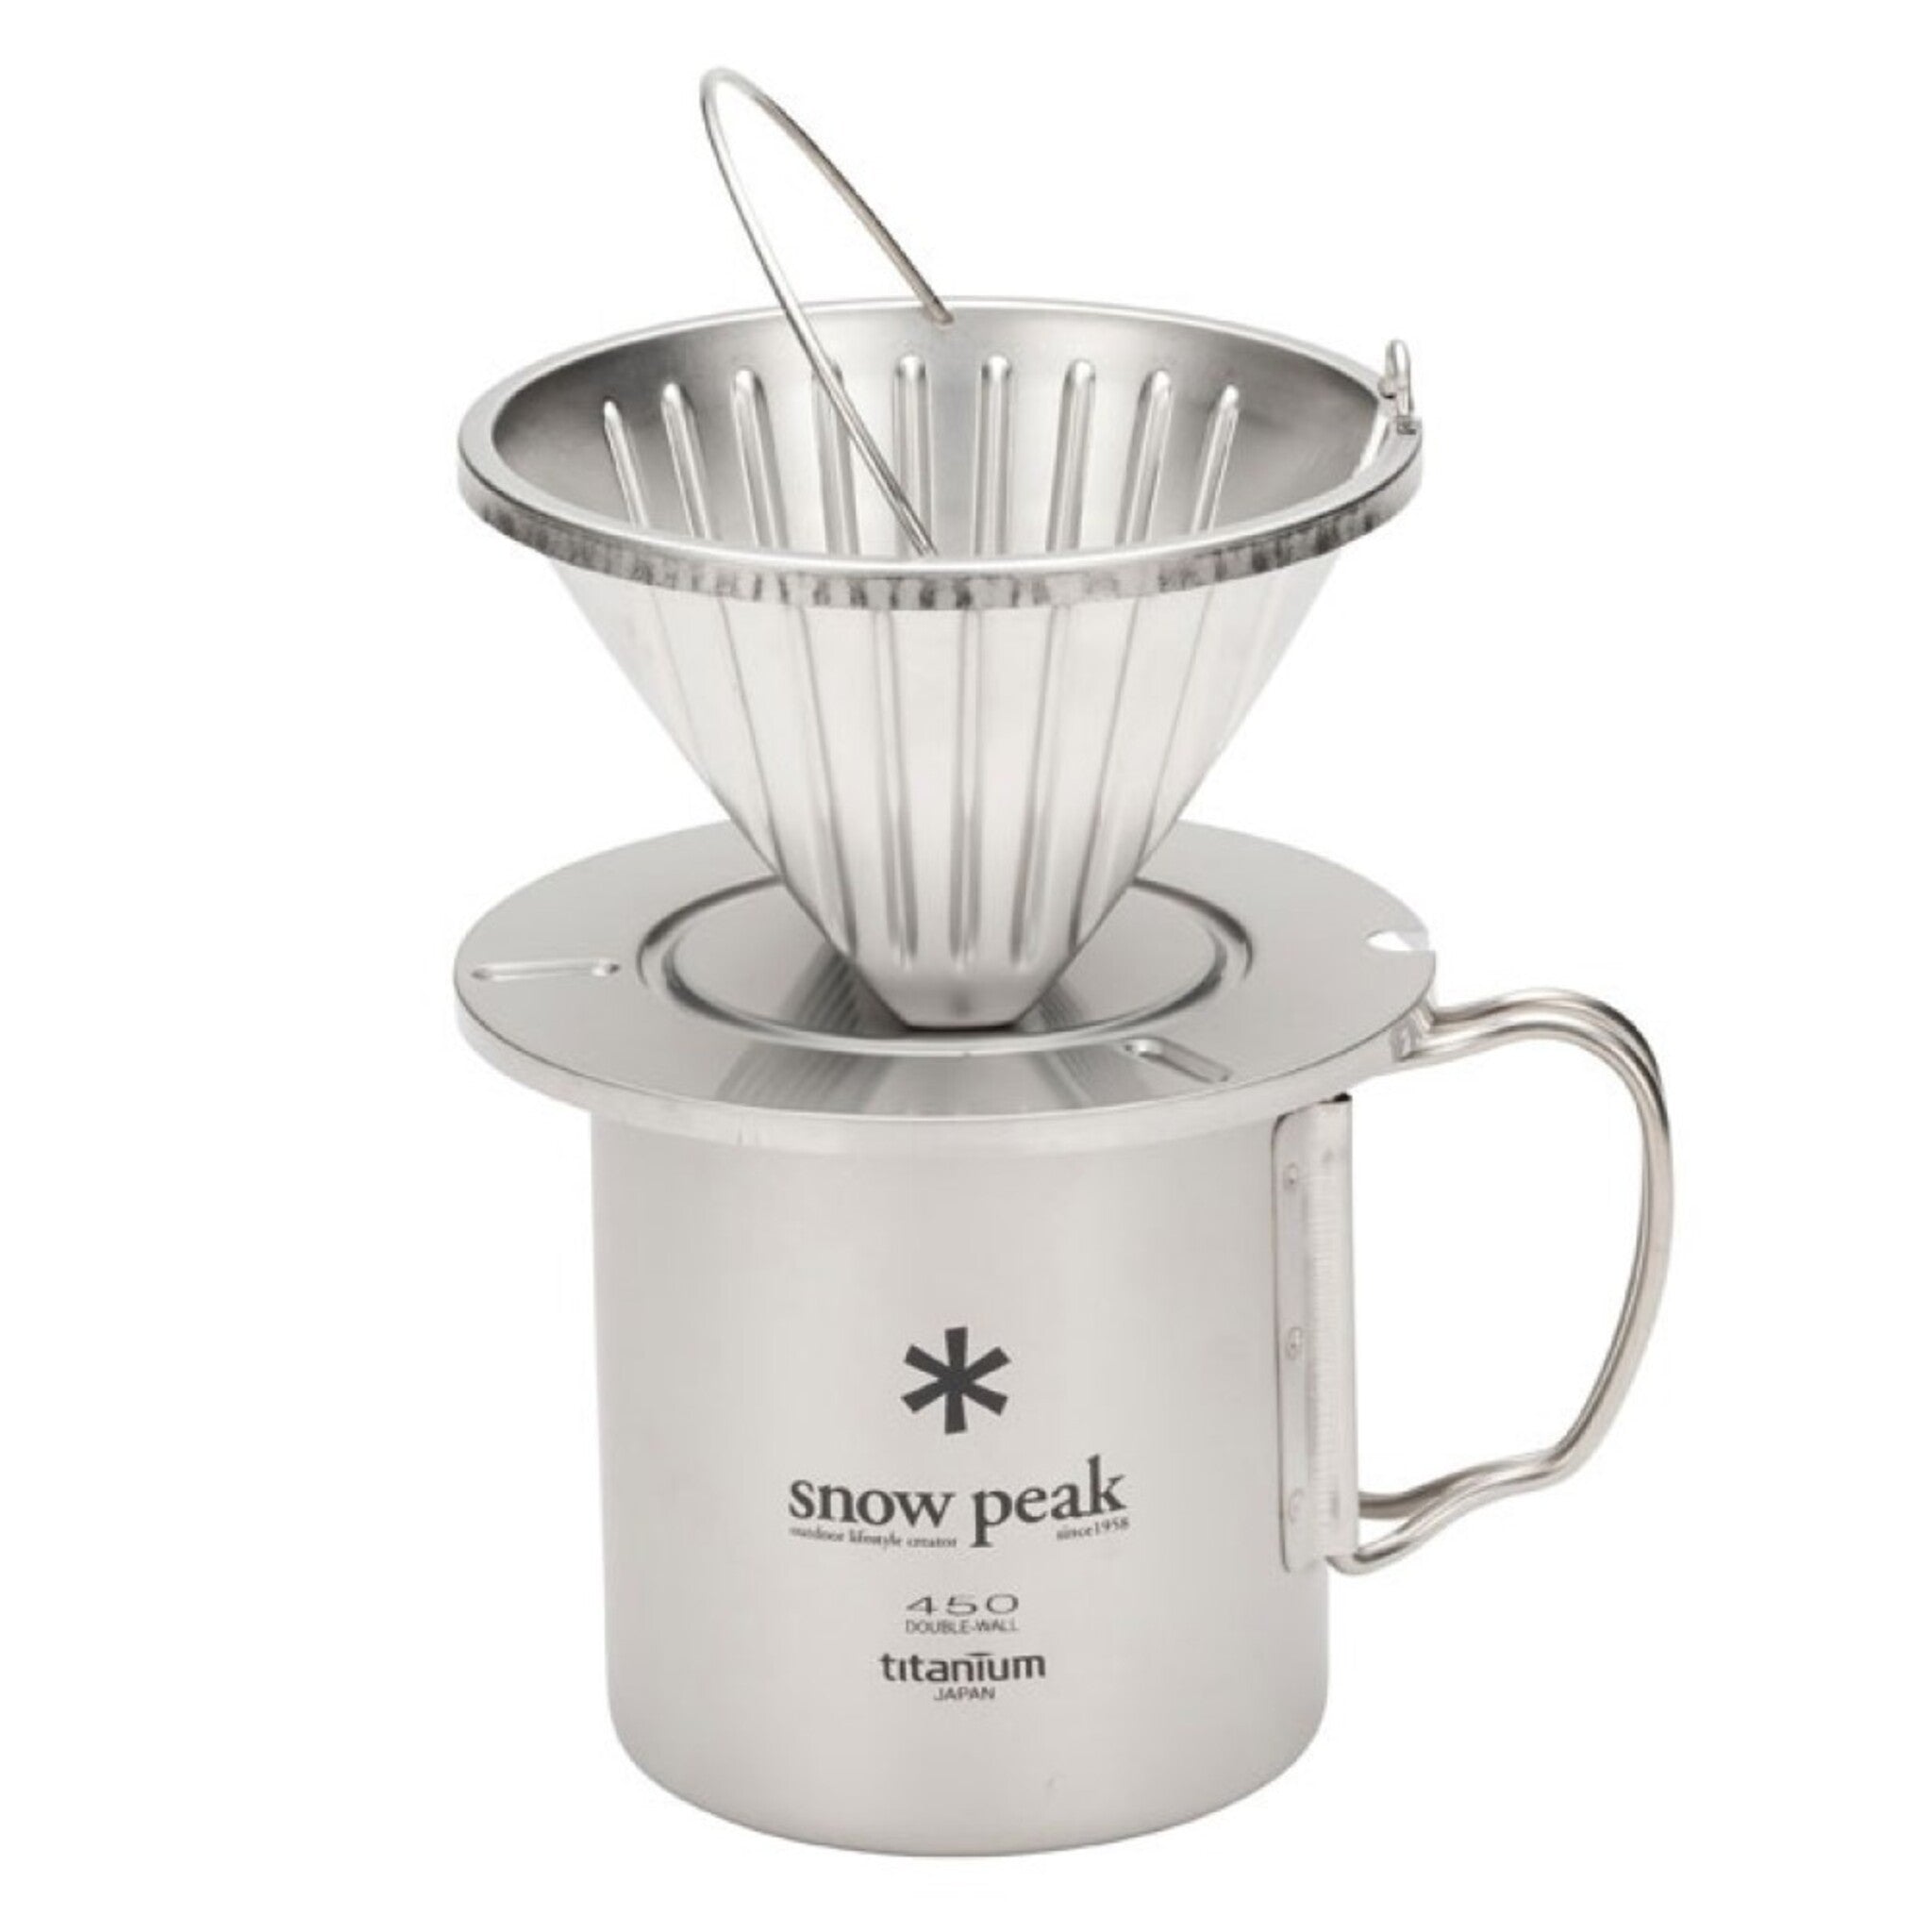 SnowPeak 營地咖啡師 二合一功能咖啡壺 PR-880